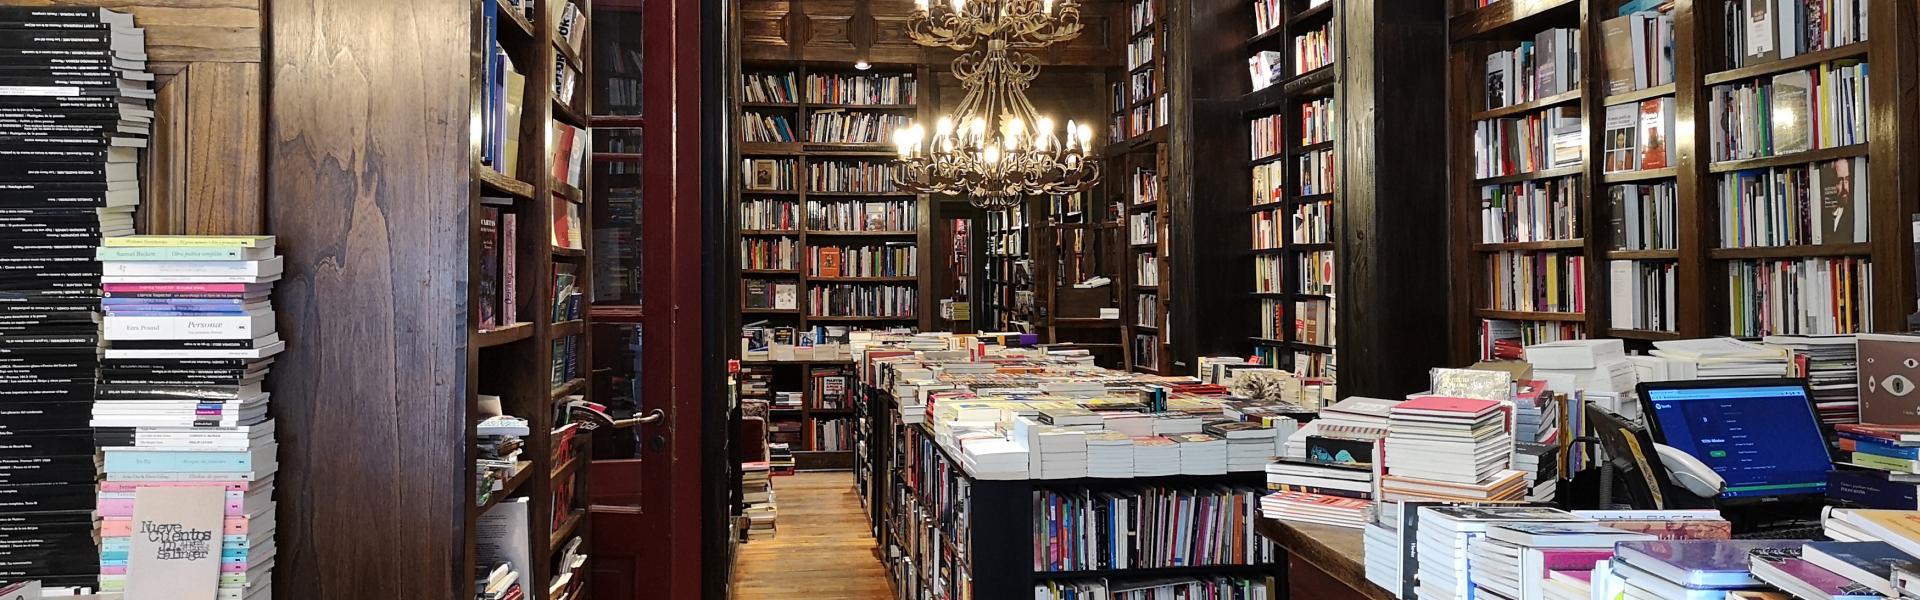 Eterna Cadencia, kaunis vanha kirjakauppa Buenos Airesissa. Kuva: Johanna Ruohonen